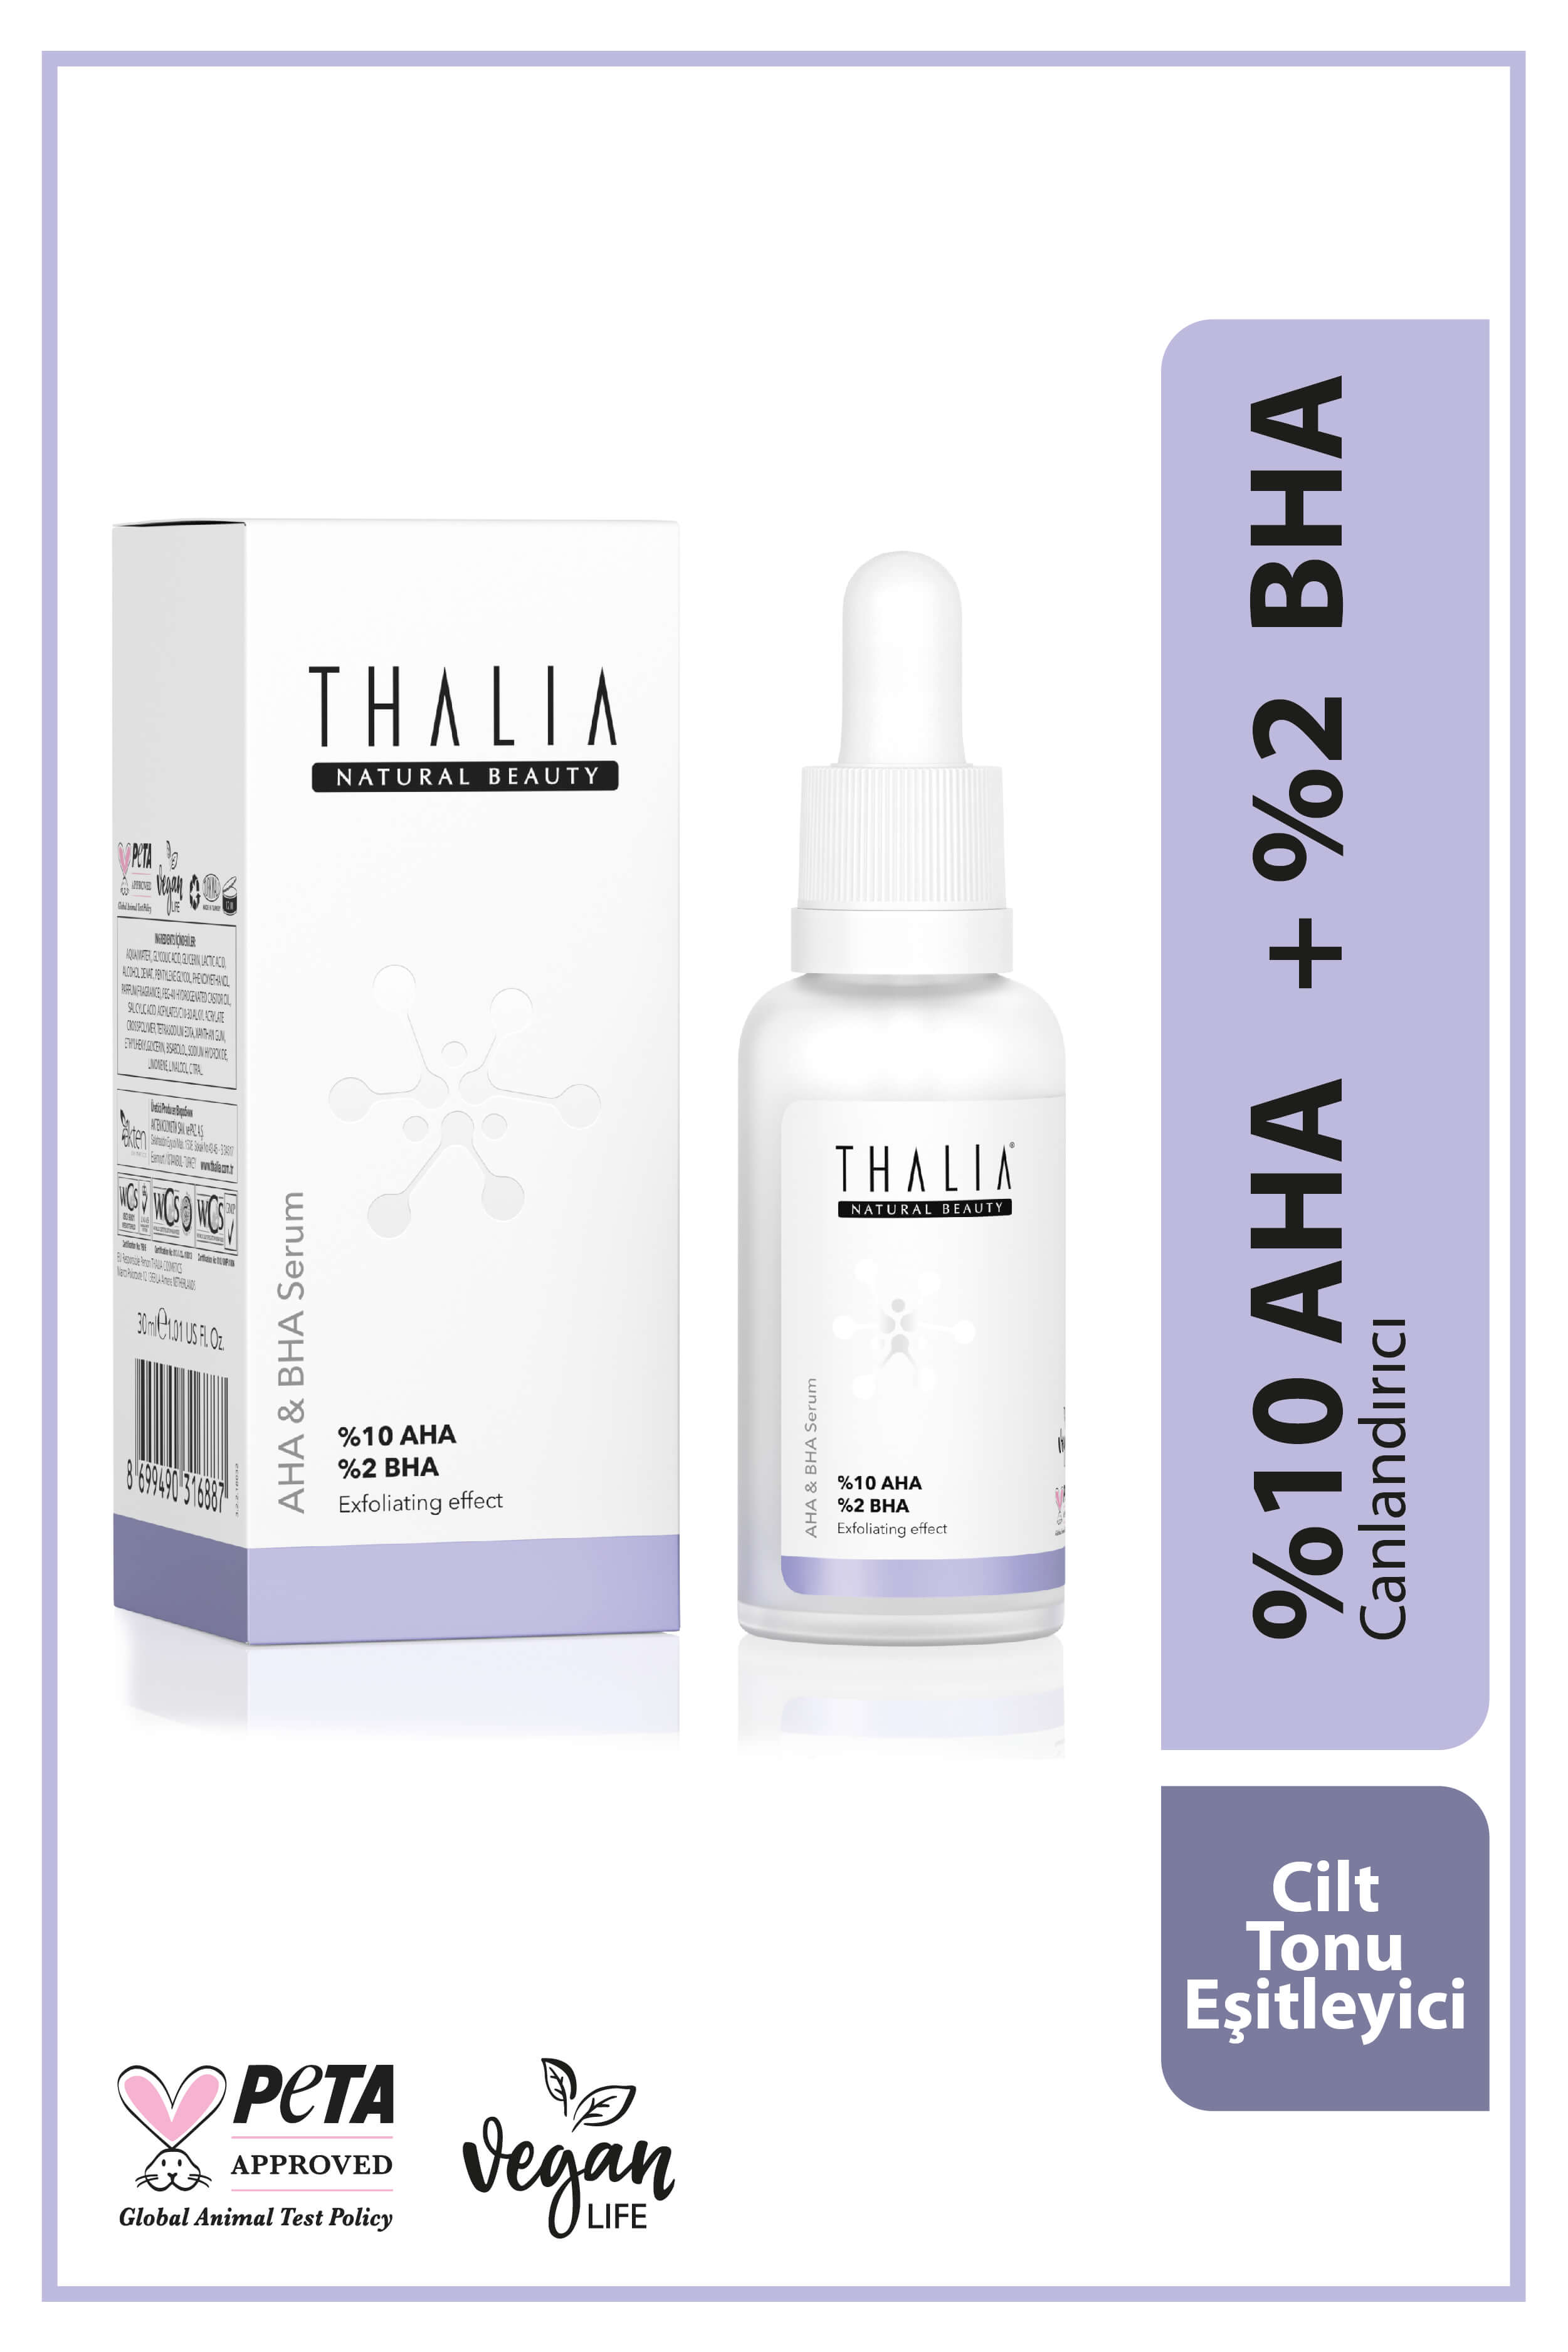 Thalia Canlandırıcı Cilt Tonu Eşitleyici Yüz Peeling Serum %10 AHA + %2  BHA - 30 ml